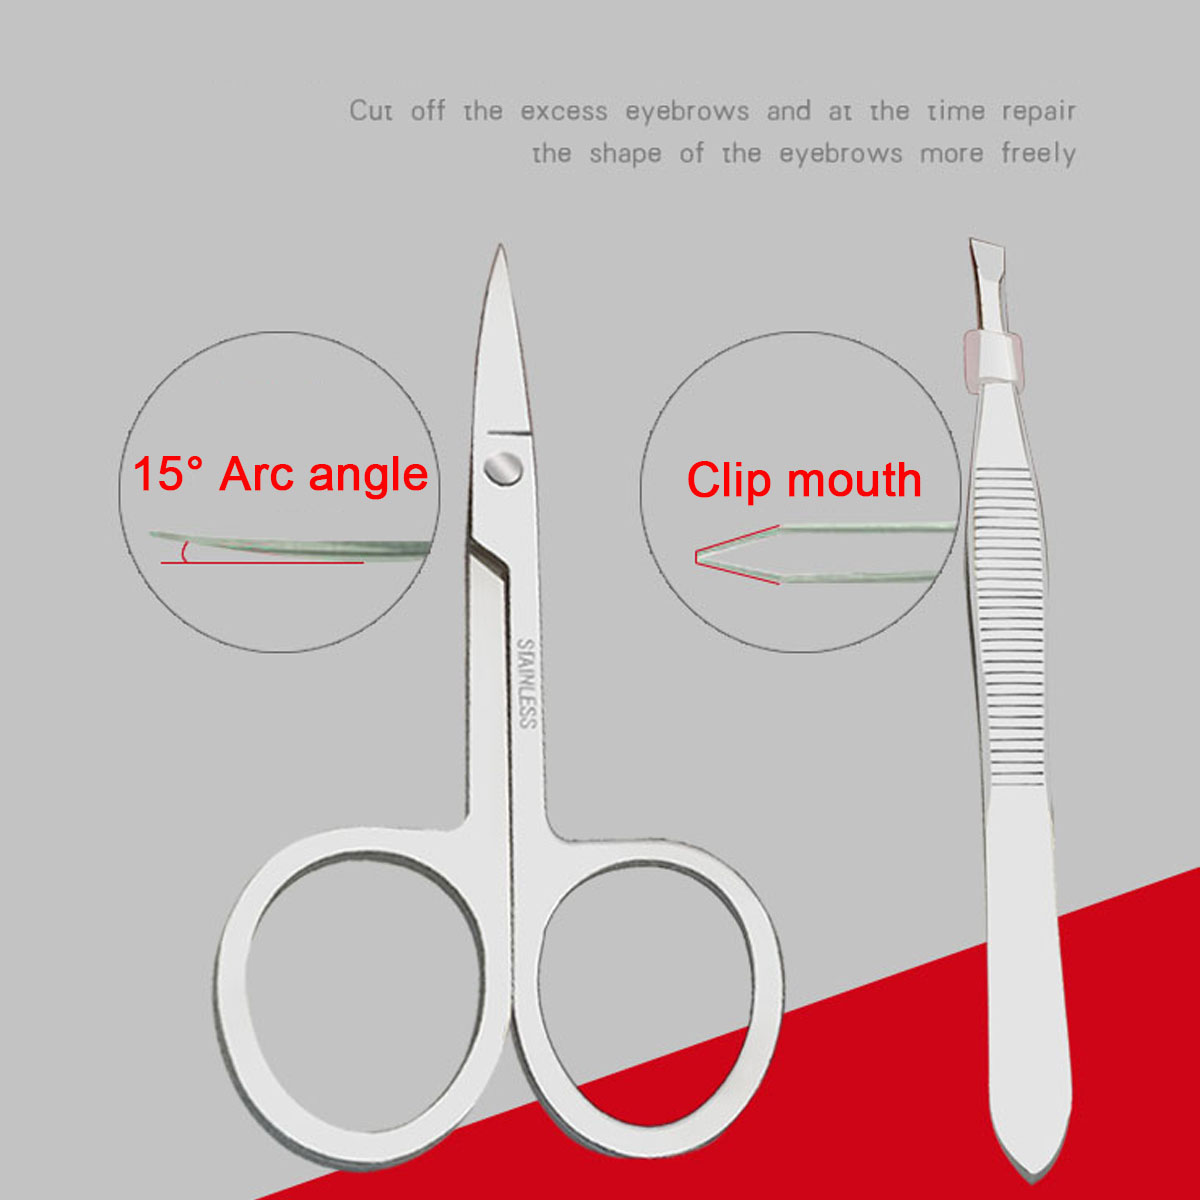 13Pcs-Pedicure-Manicure-Set-Nail-Clipper-Cuticle-Cleaner-Acne-Remover-Kit-Case-1352339